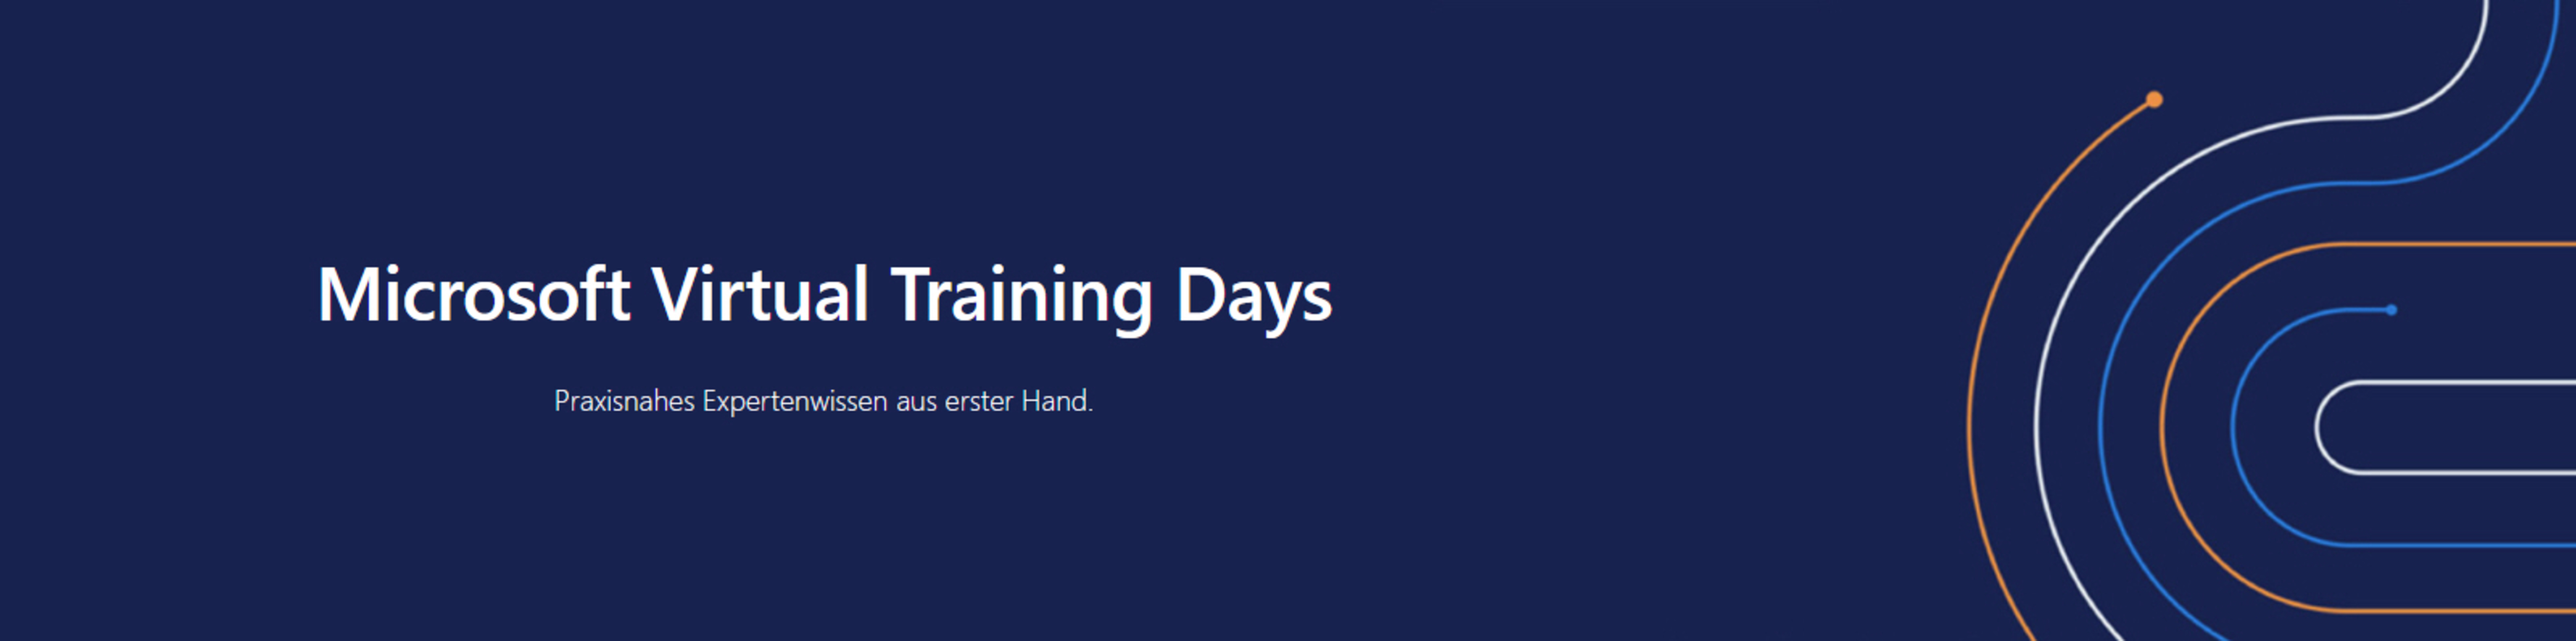 Microsoft Virtual Training Days